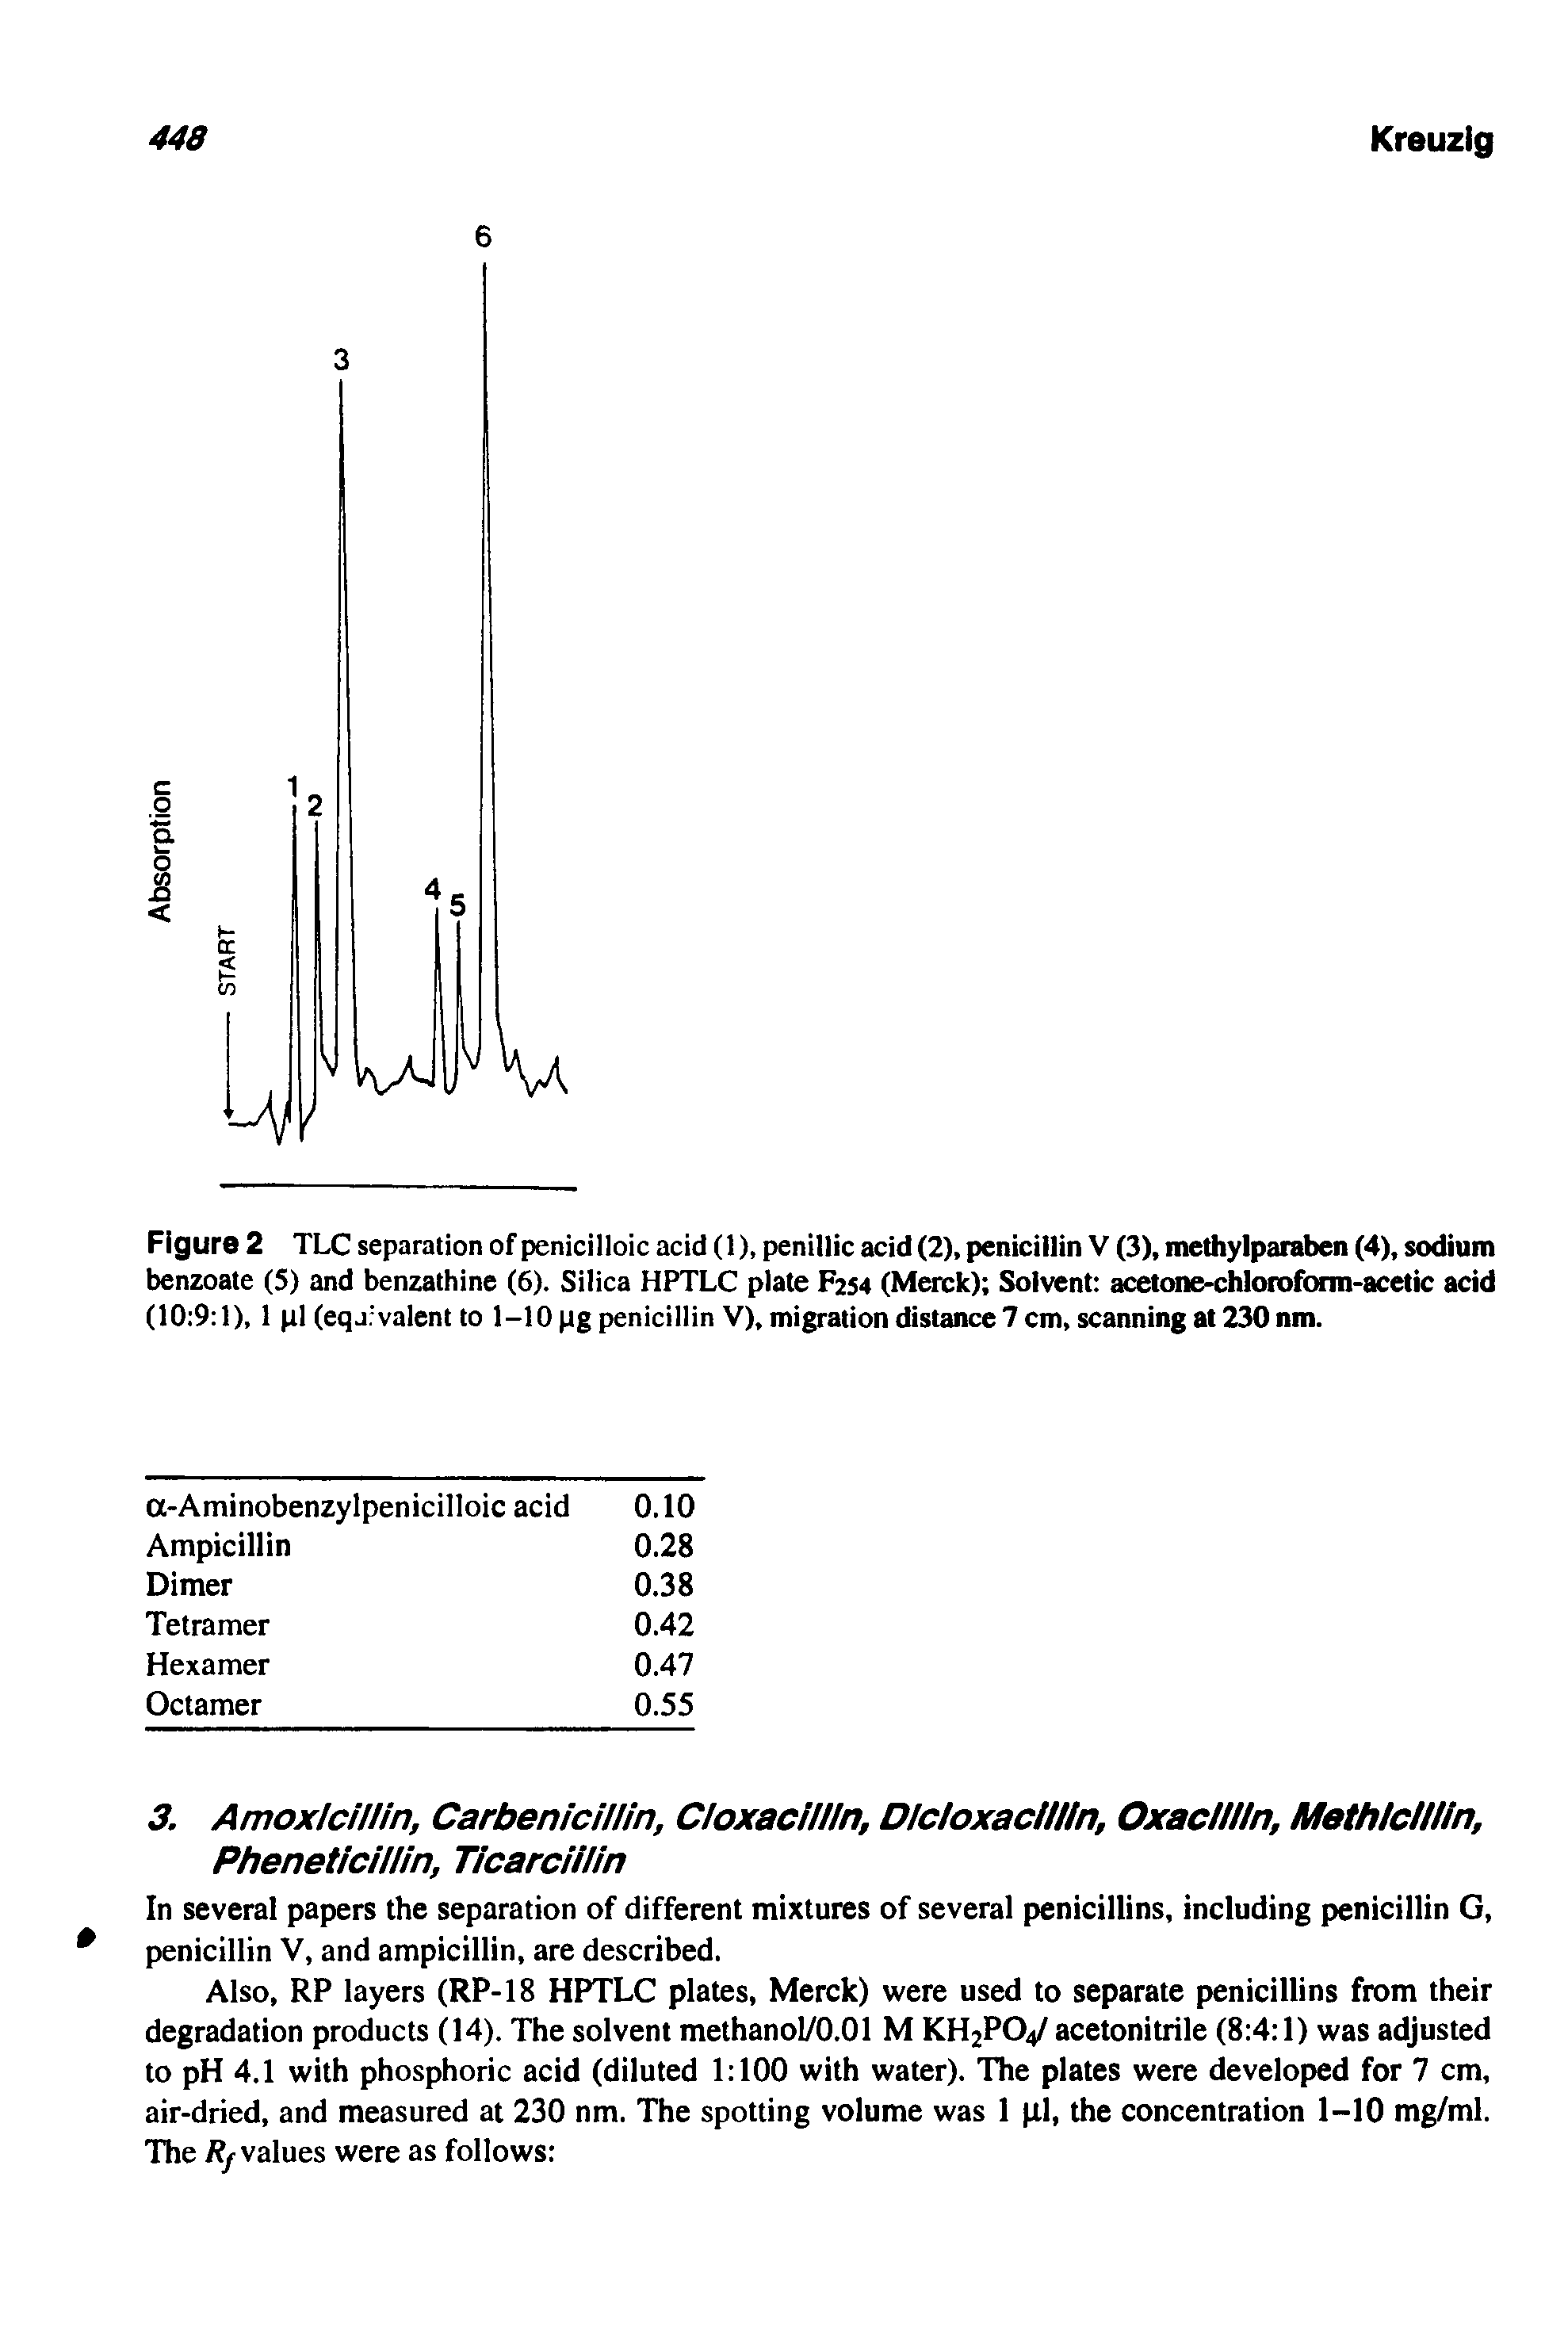 Figure 2 TLC separation of penicilloic acid (1), penillic acid (2), penicillin V (3), methylparaben (4), sodium benzoate (5) and benzathine (6). Silica HPTLC plate F254 (Merck) Solvent acetcme-chloiDfonn-acetic acid (10 9 1), 1 pi (eqjrvalent to 1-10 pg penicillin V), migration distance 7 cm, scanning at 230 nm.